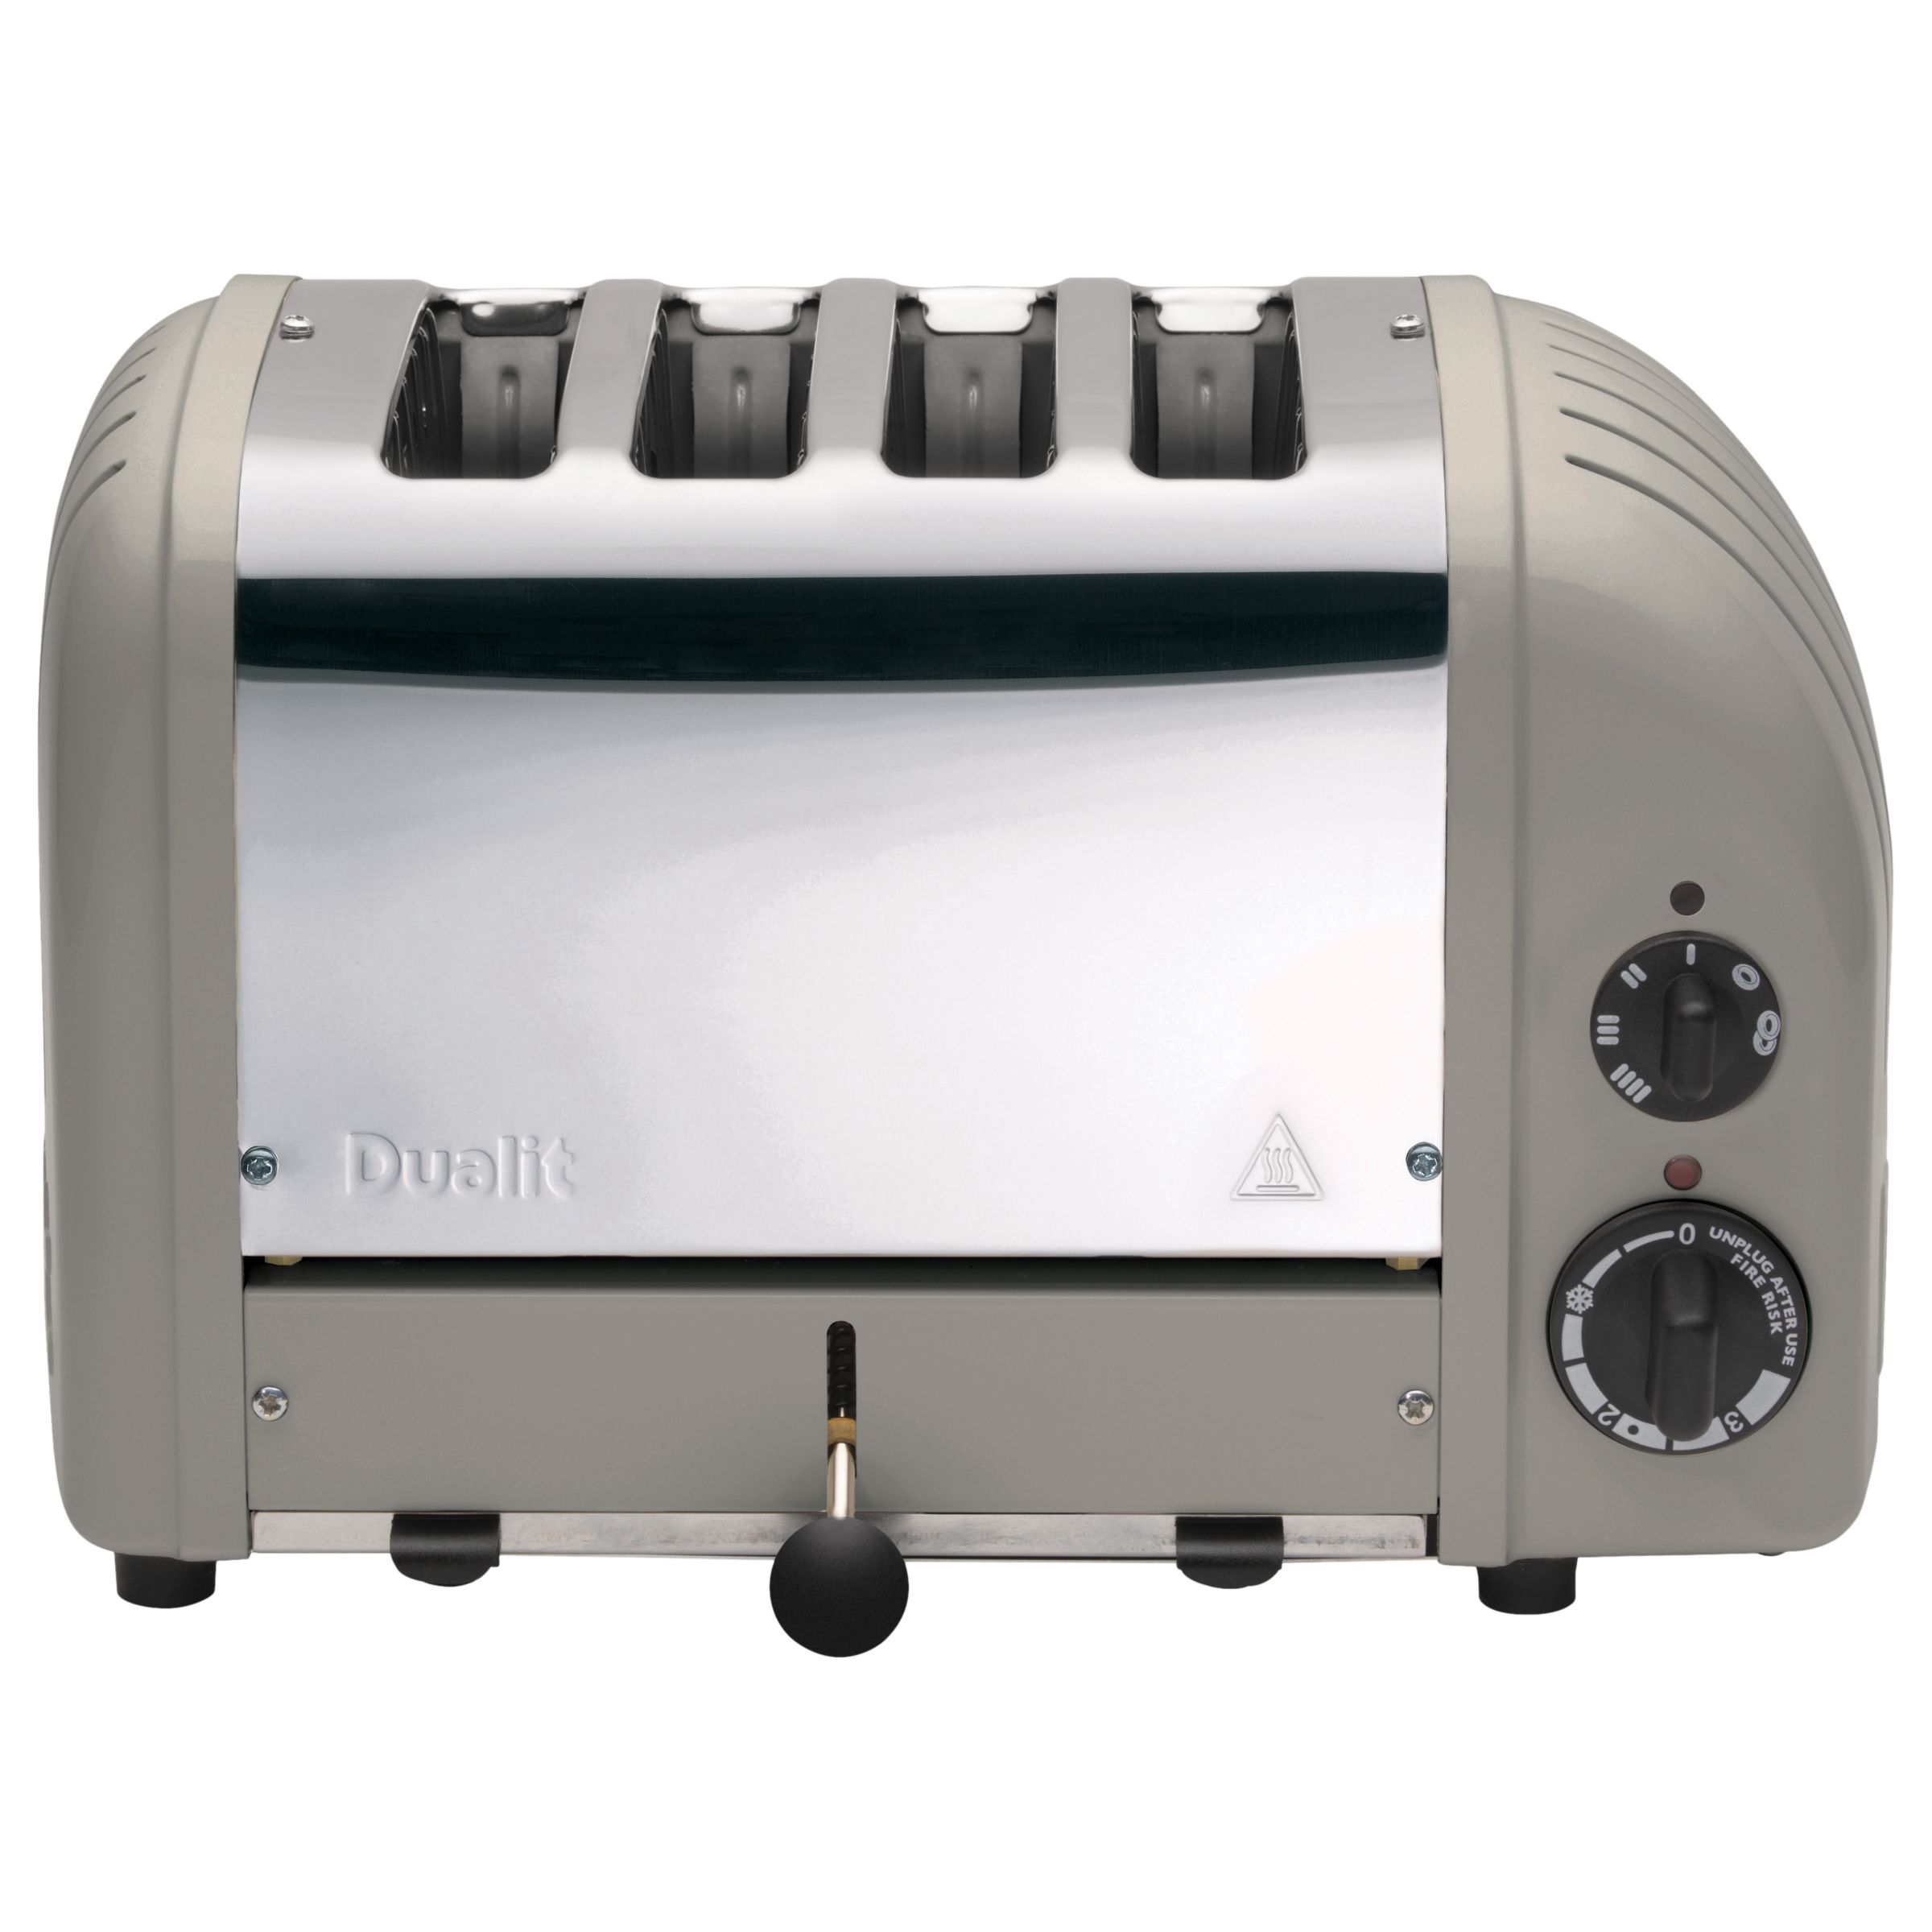 Dualit NewGen 4-Slice Toaster